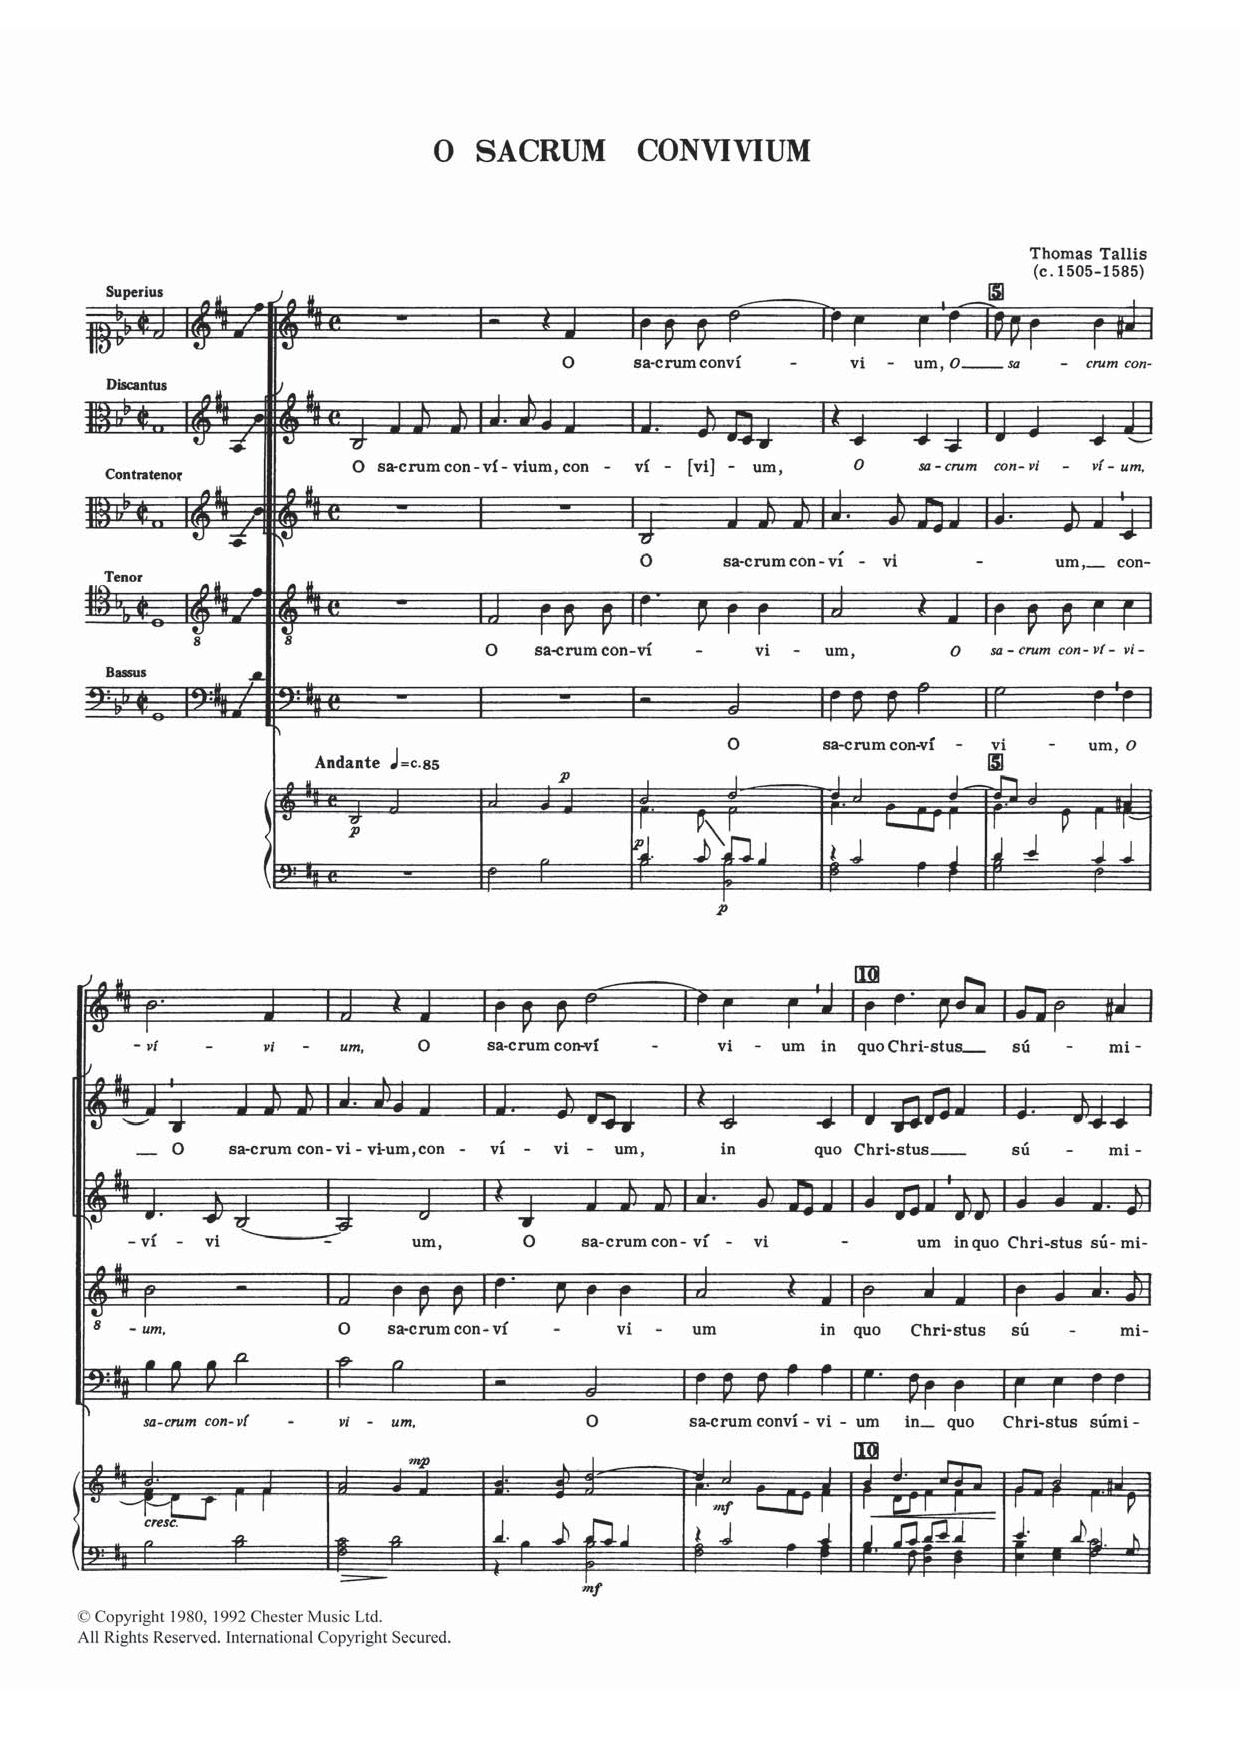 Thomas Tallis O Sacrum Convivium sheet music notes and chords arranged for Piano, Vocal & Guitar Chords